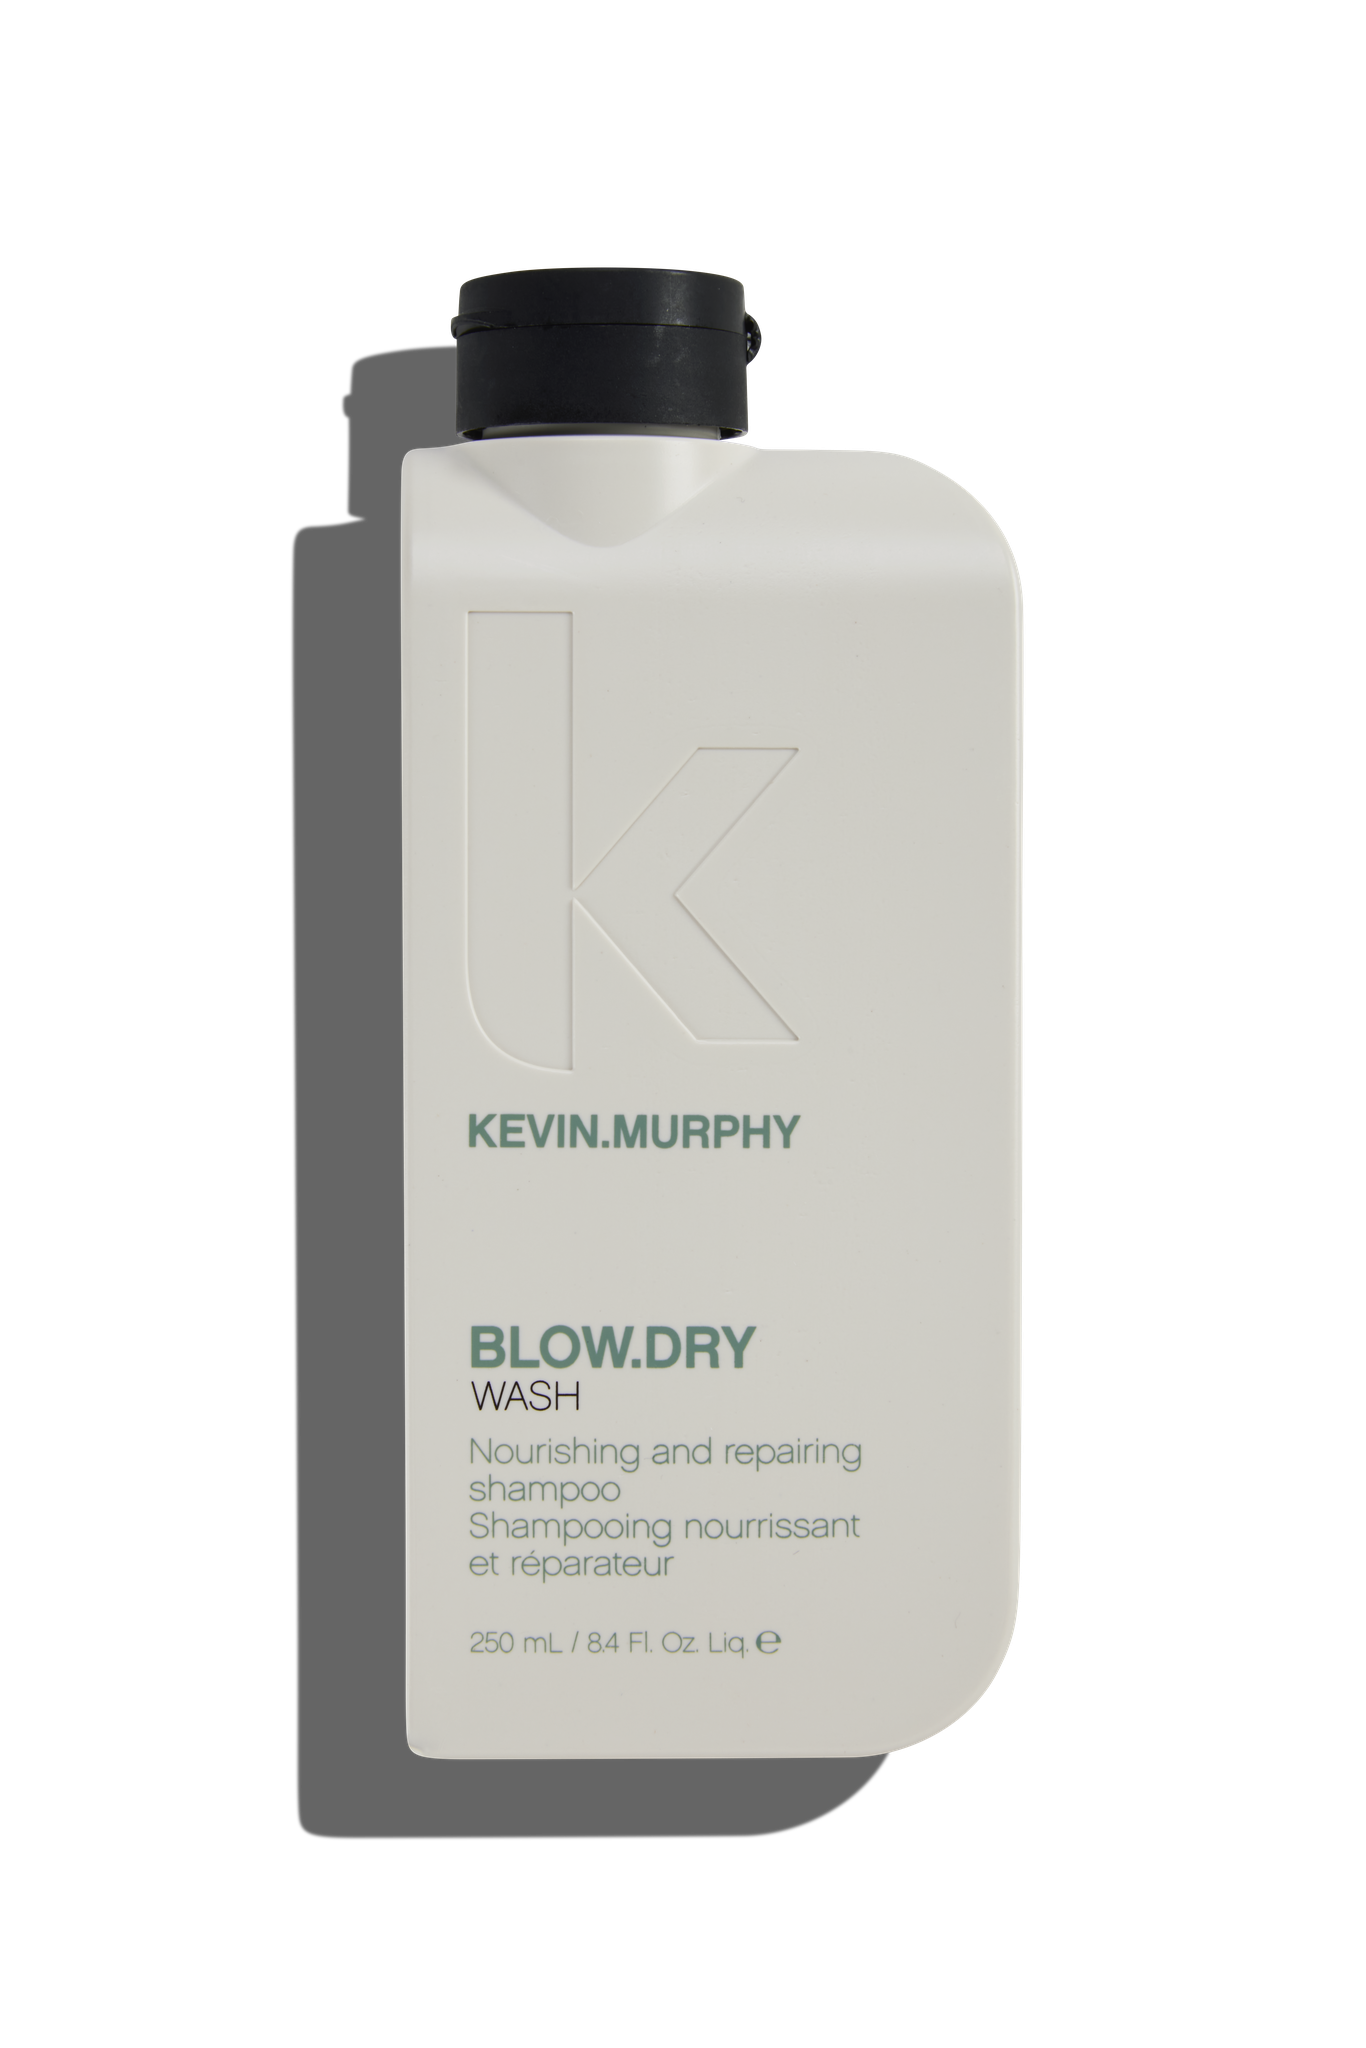 Omslagsbild för “Kevin Murphy Blow dry wash”